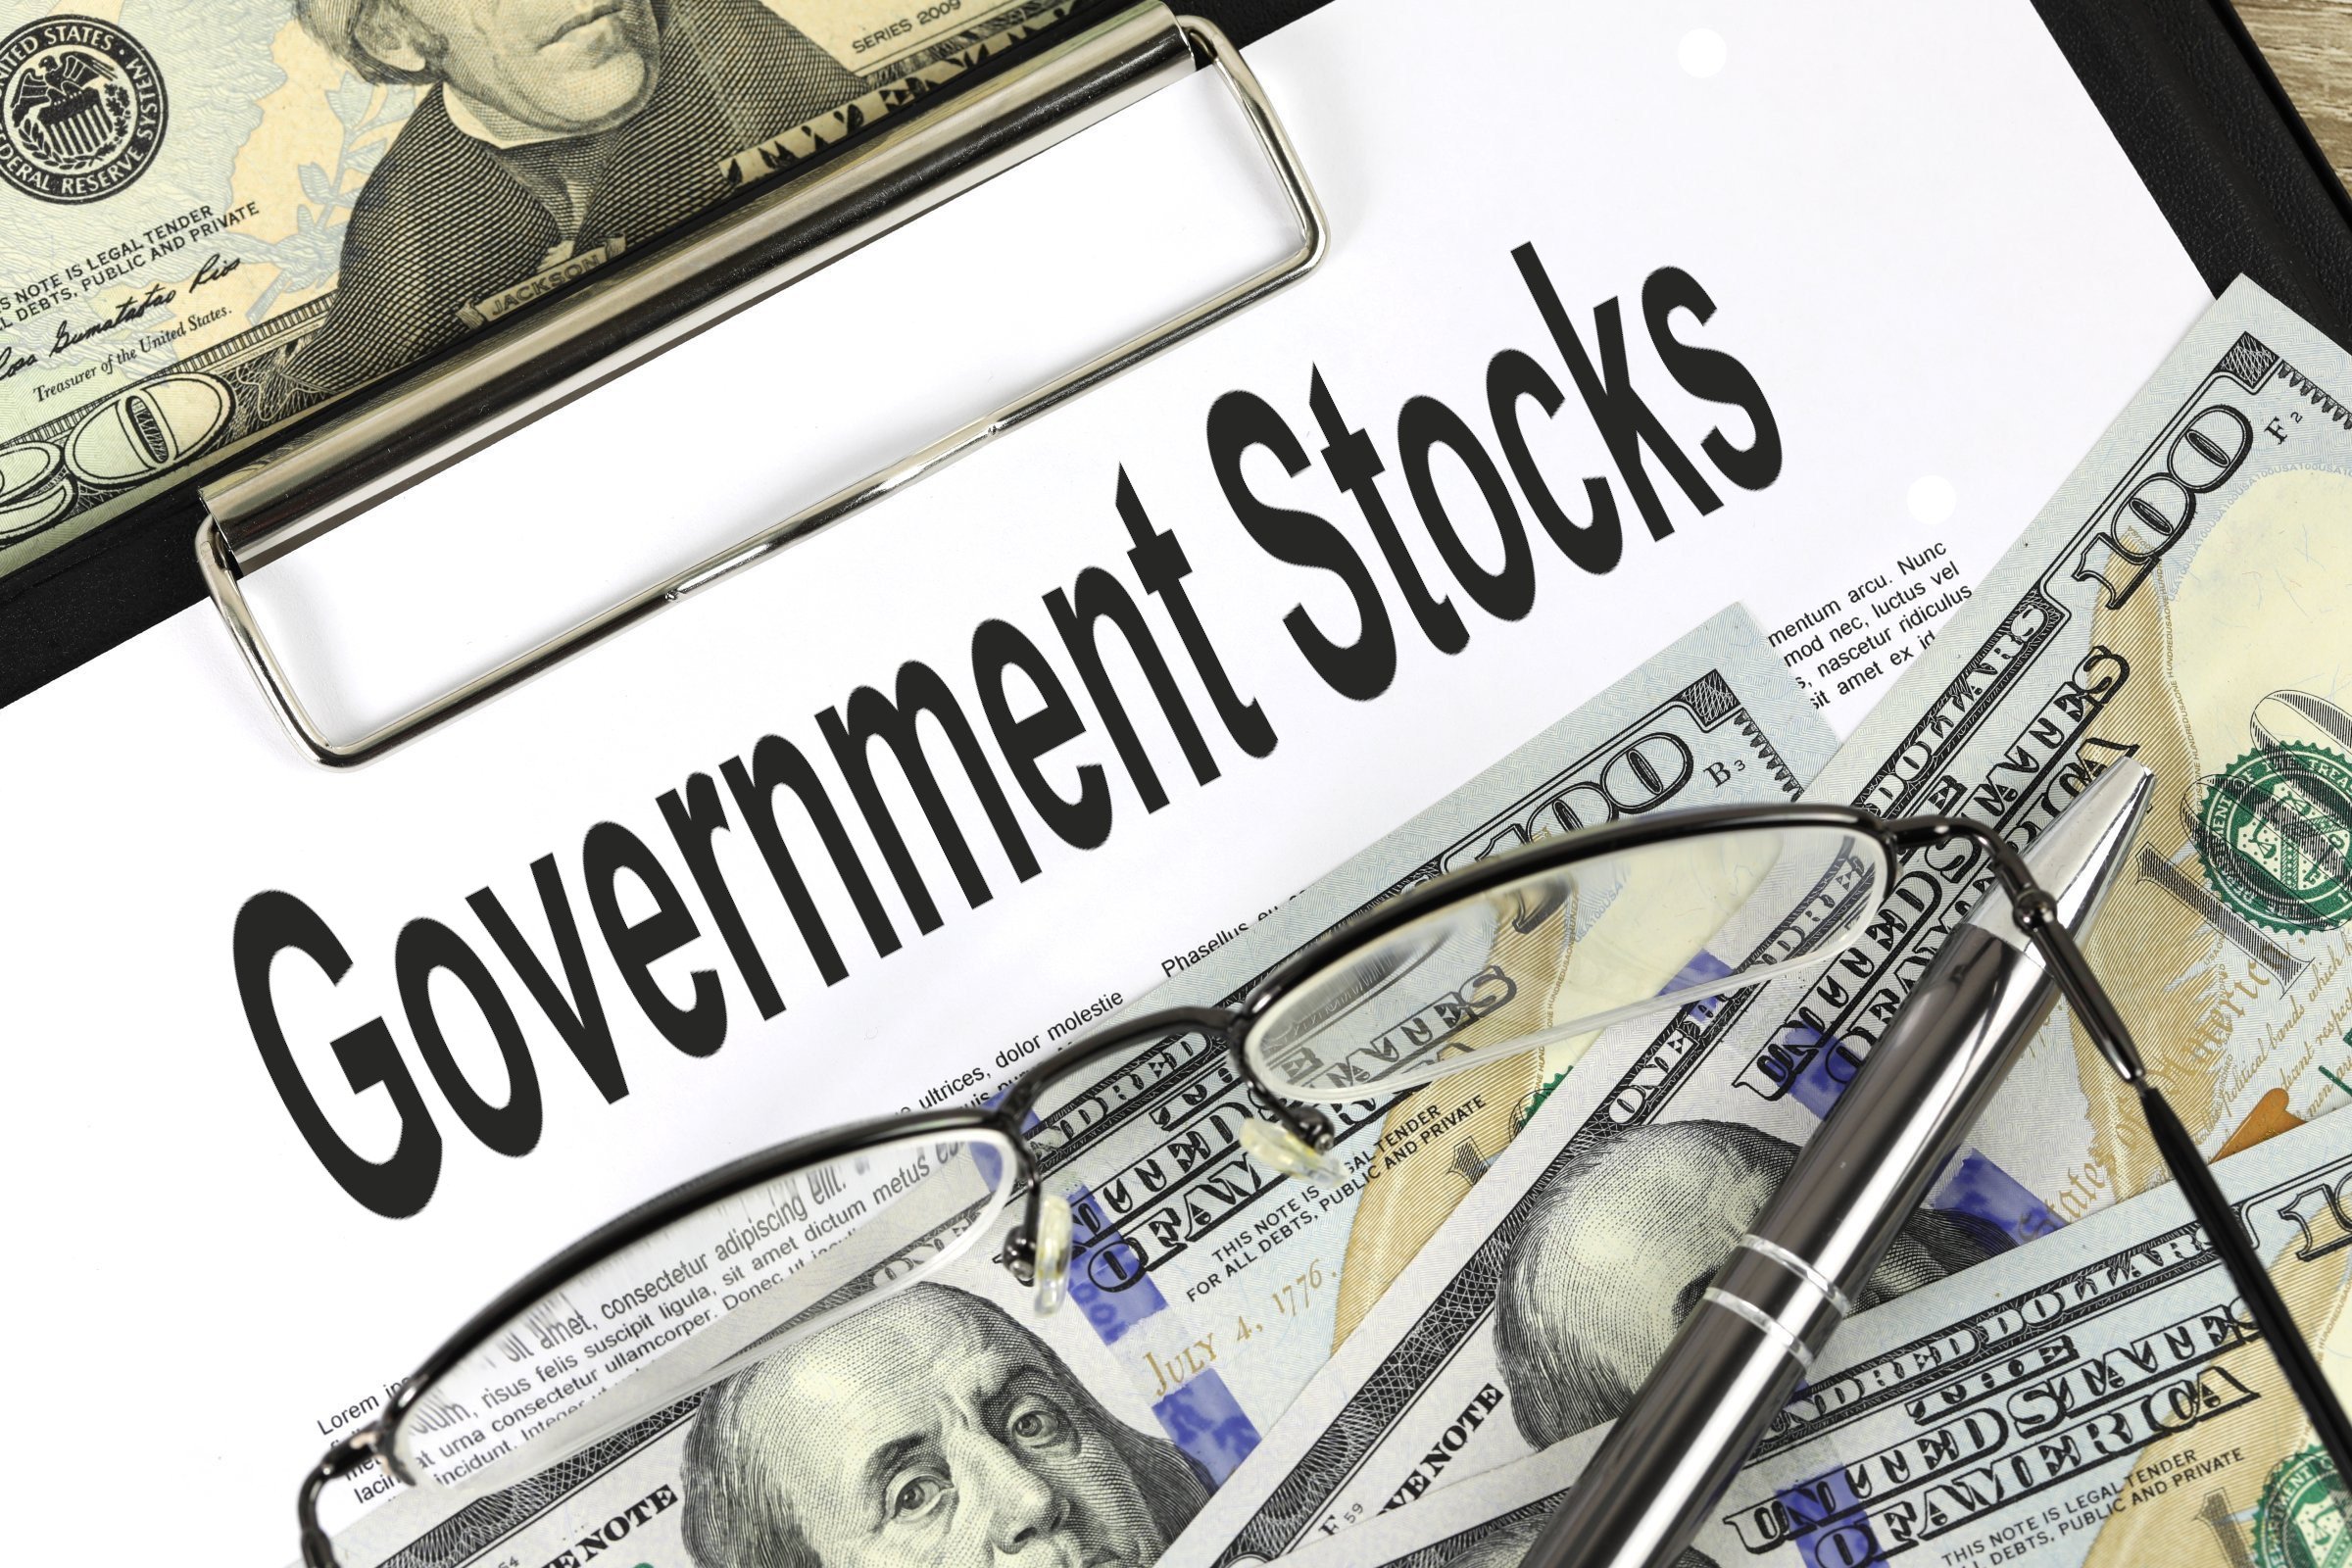 government stocks